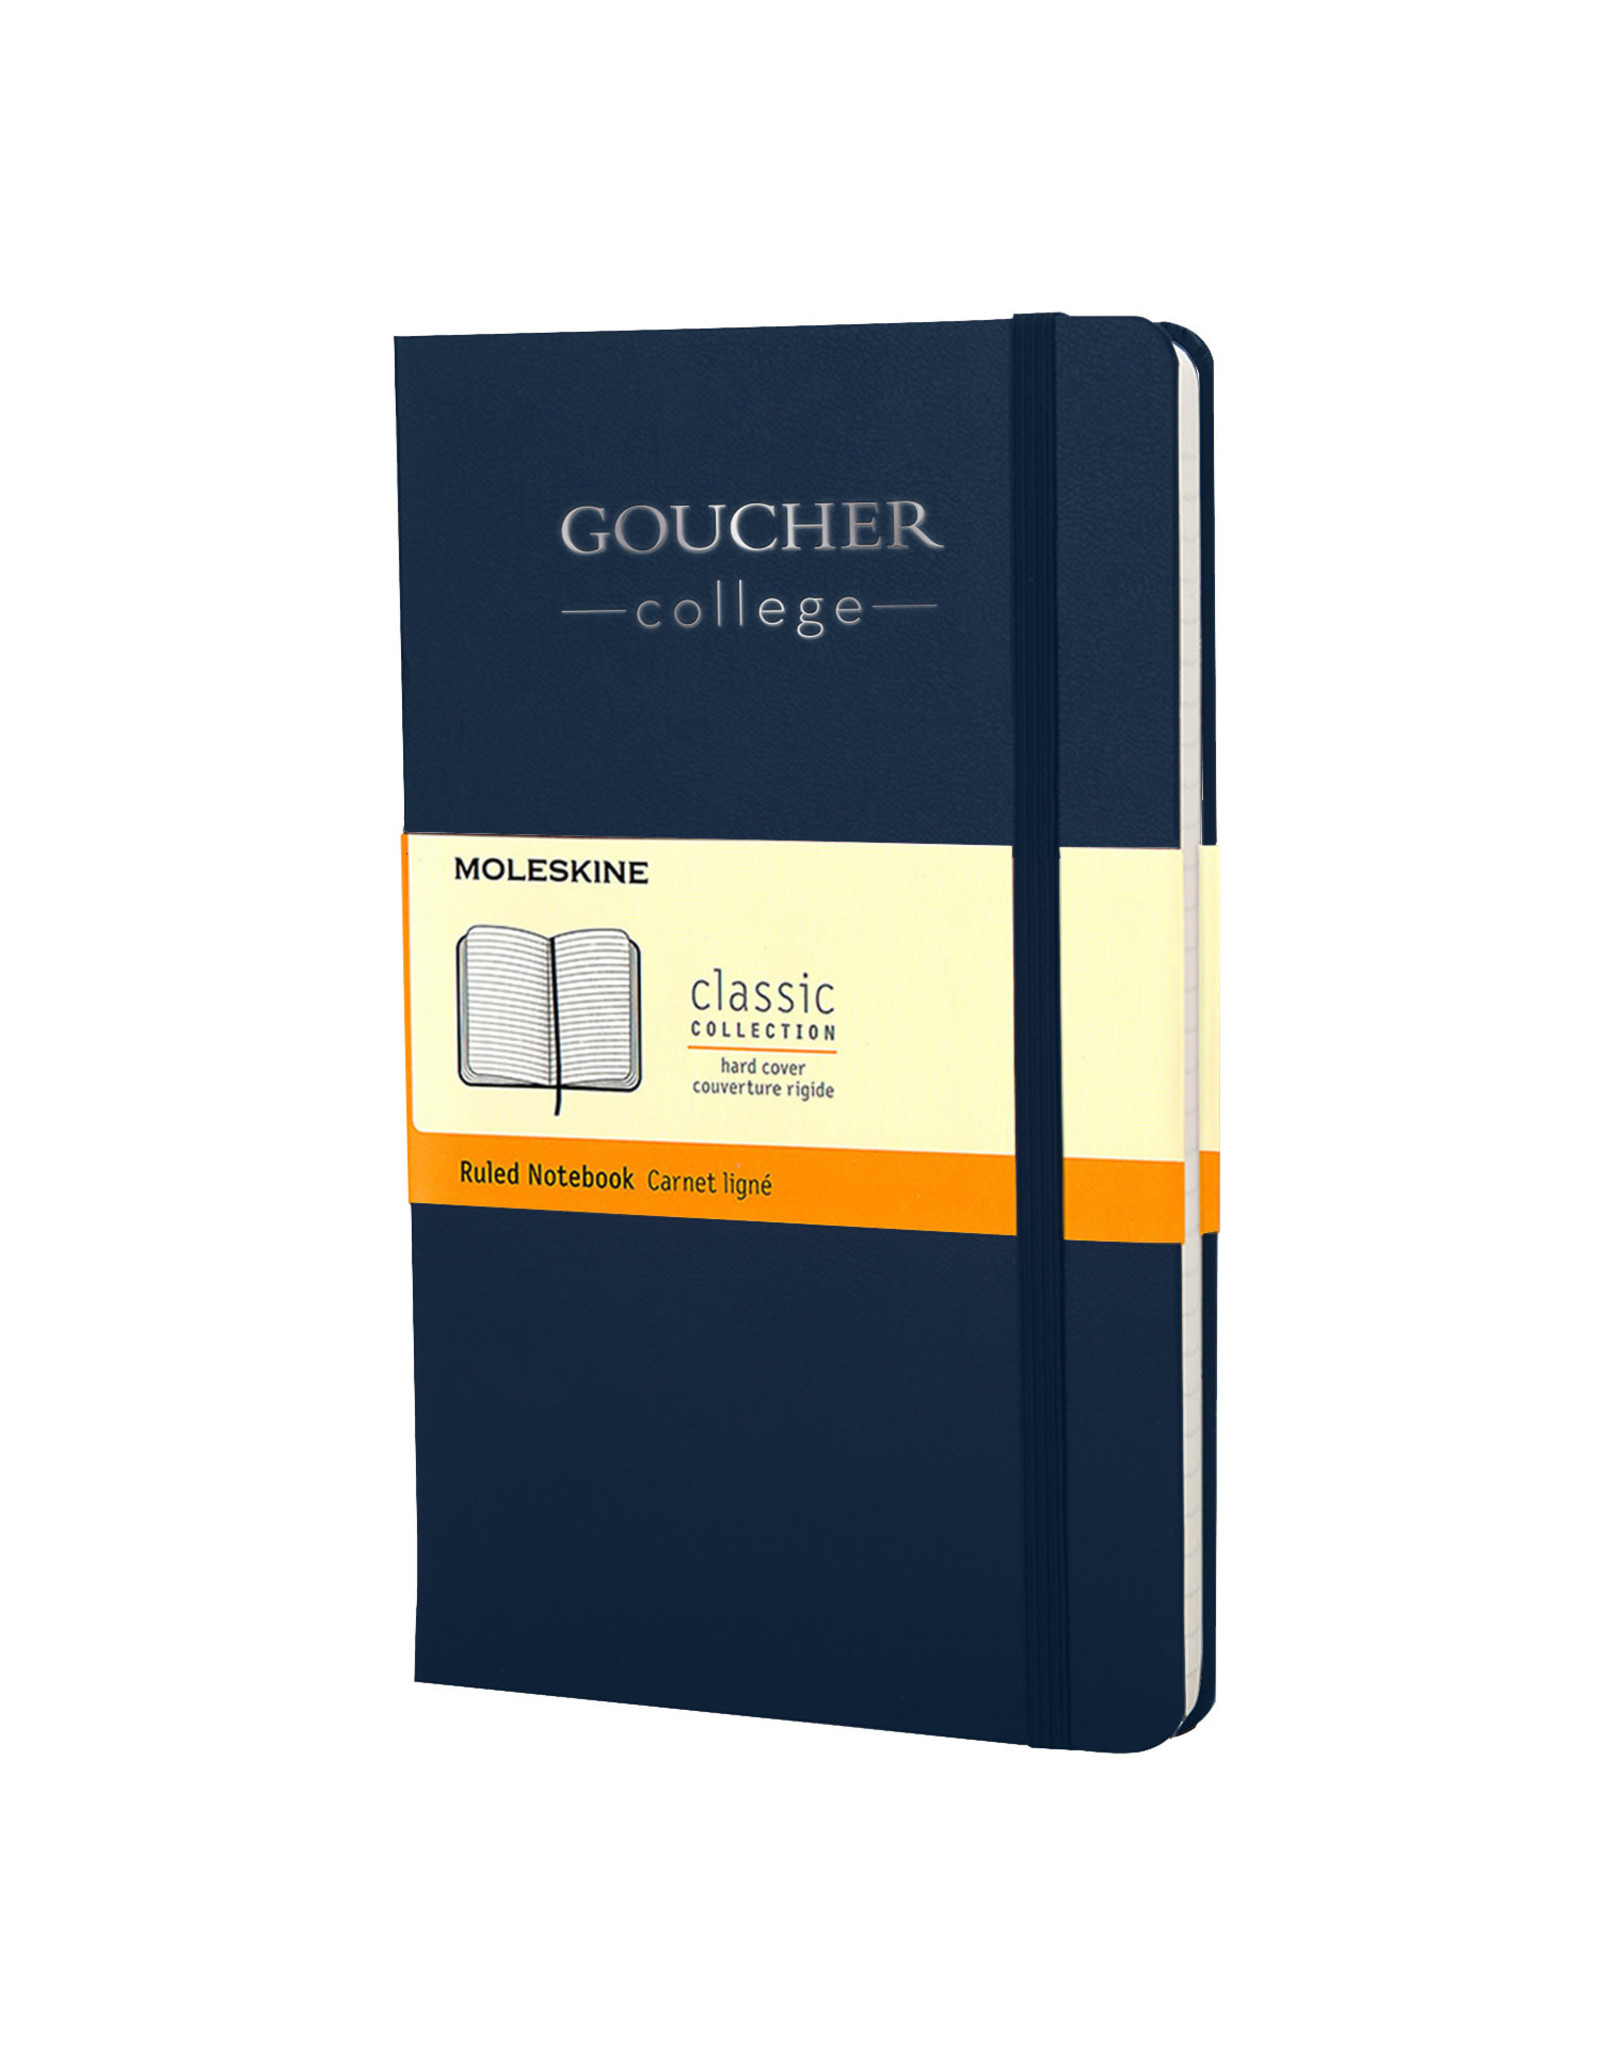 Moleskine 5"x8.25" Hardback Ruled "Goucher College" Notebook